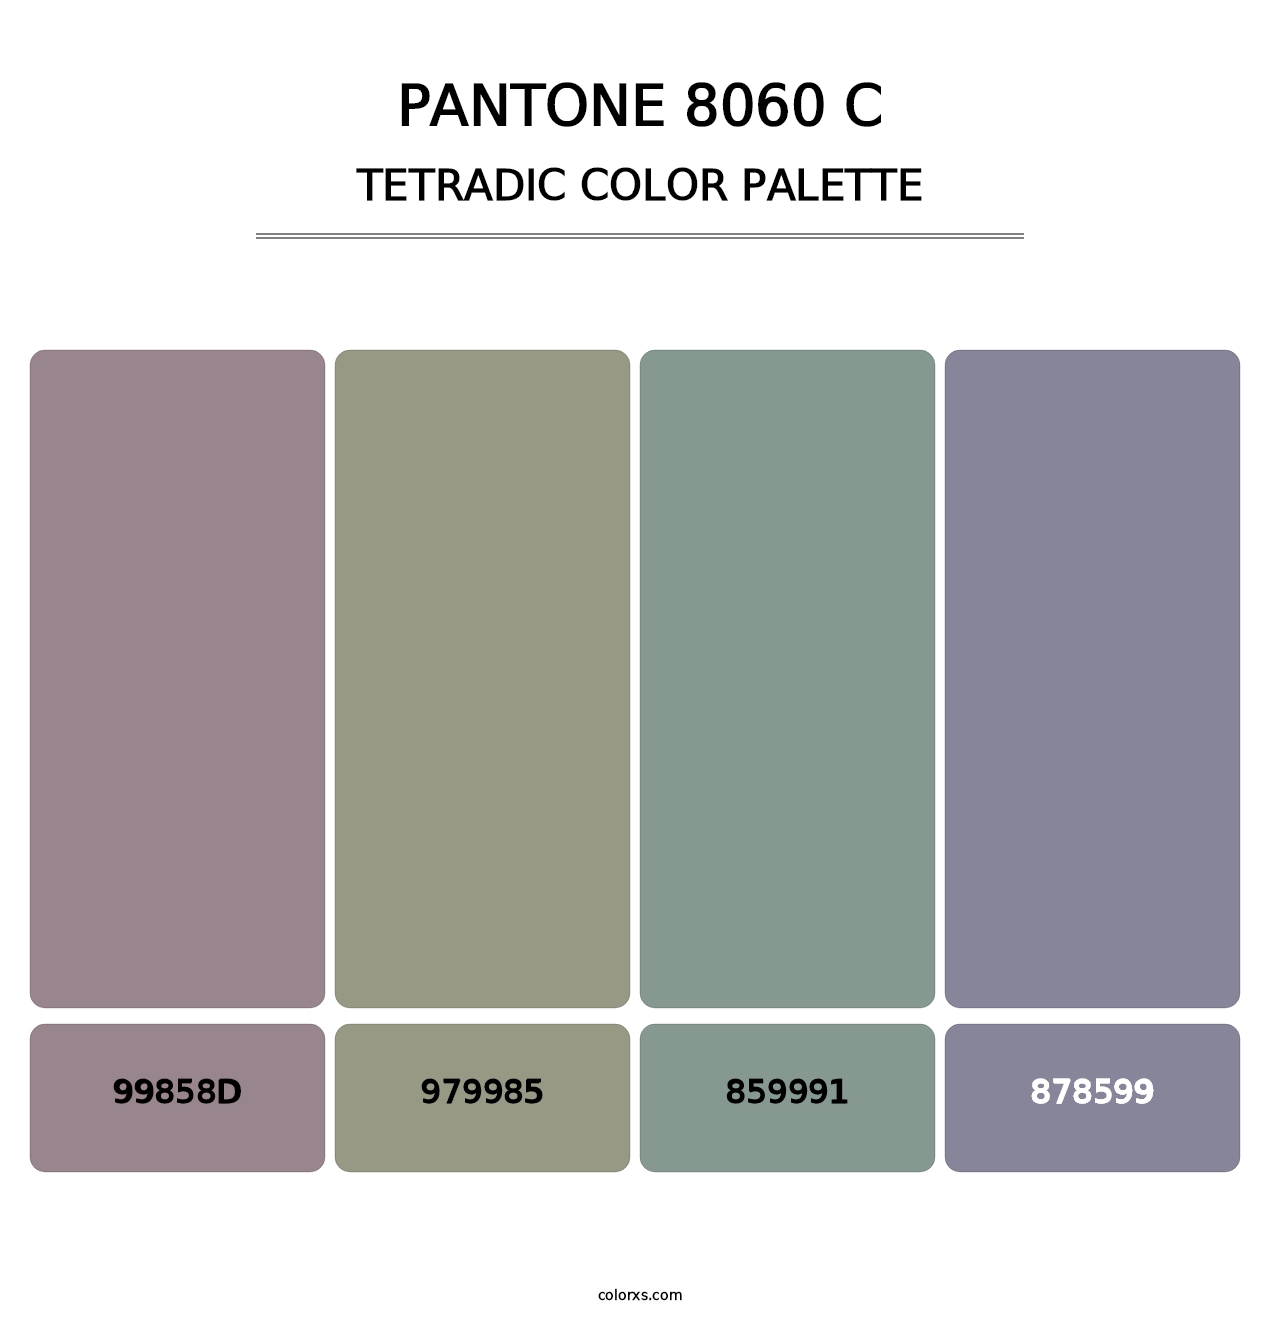 PANTONE 8060 C - Tetradic Color Palette